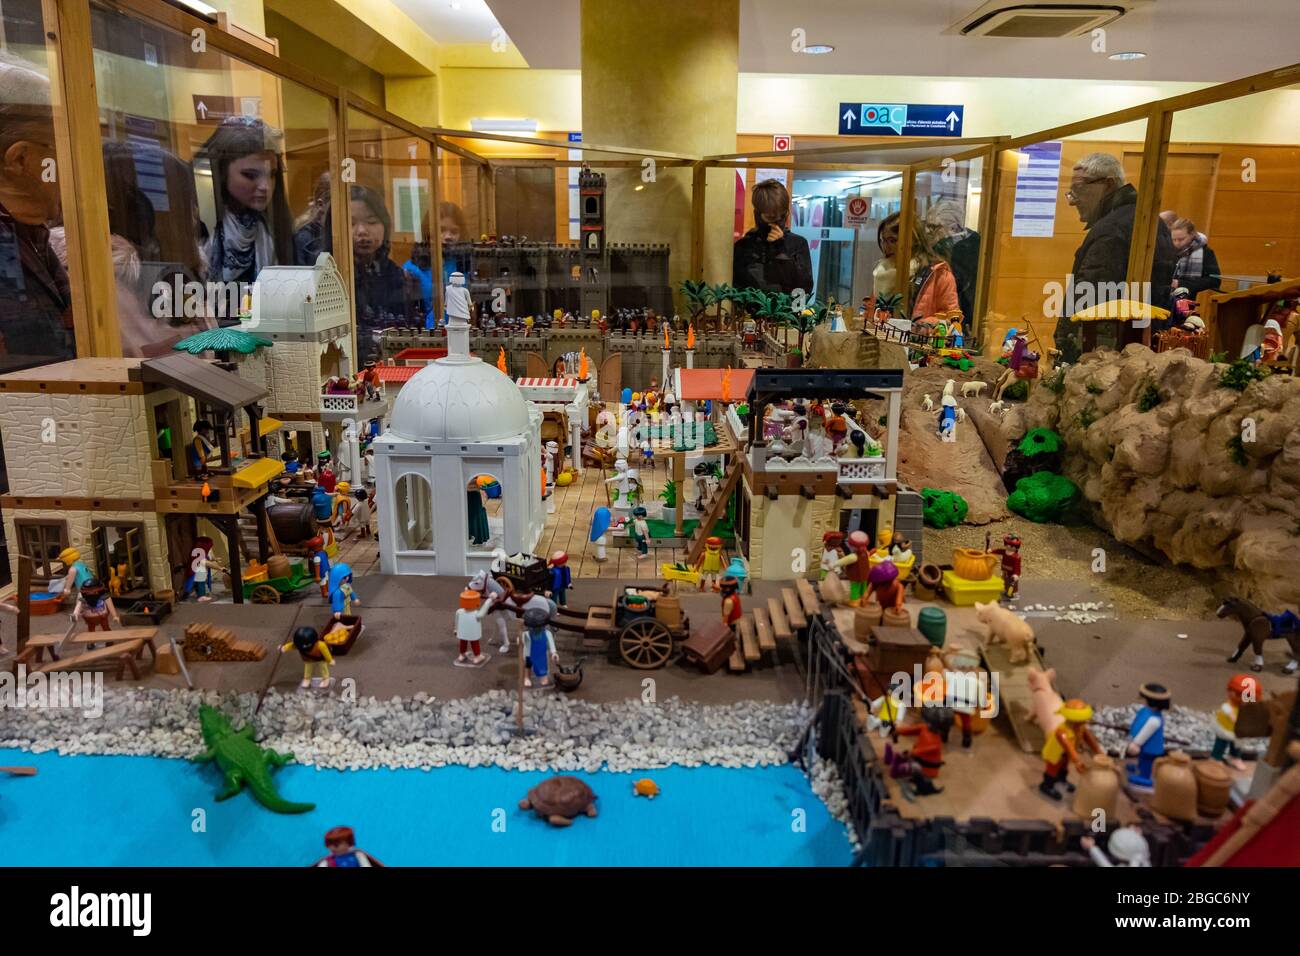 Playmobil diorama in Castelldefels, Catalonia, Spain Stock Photo - Alamy